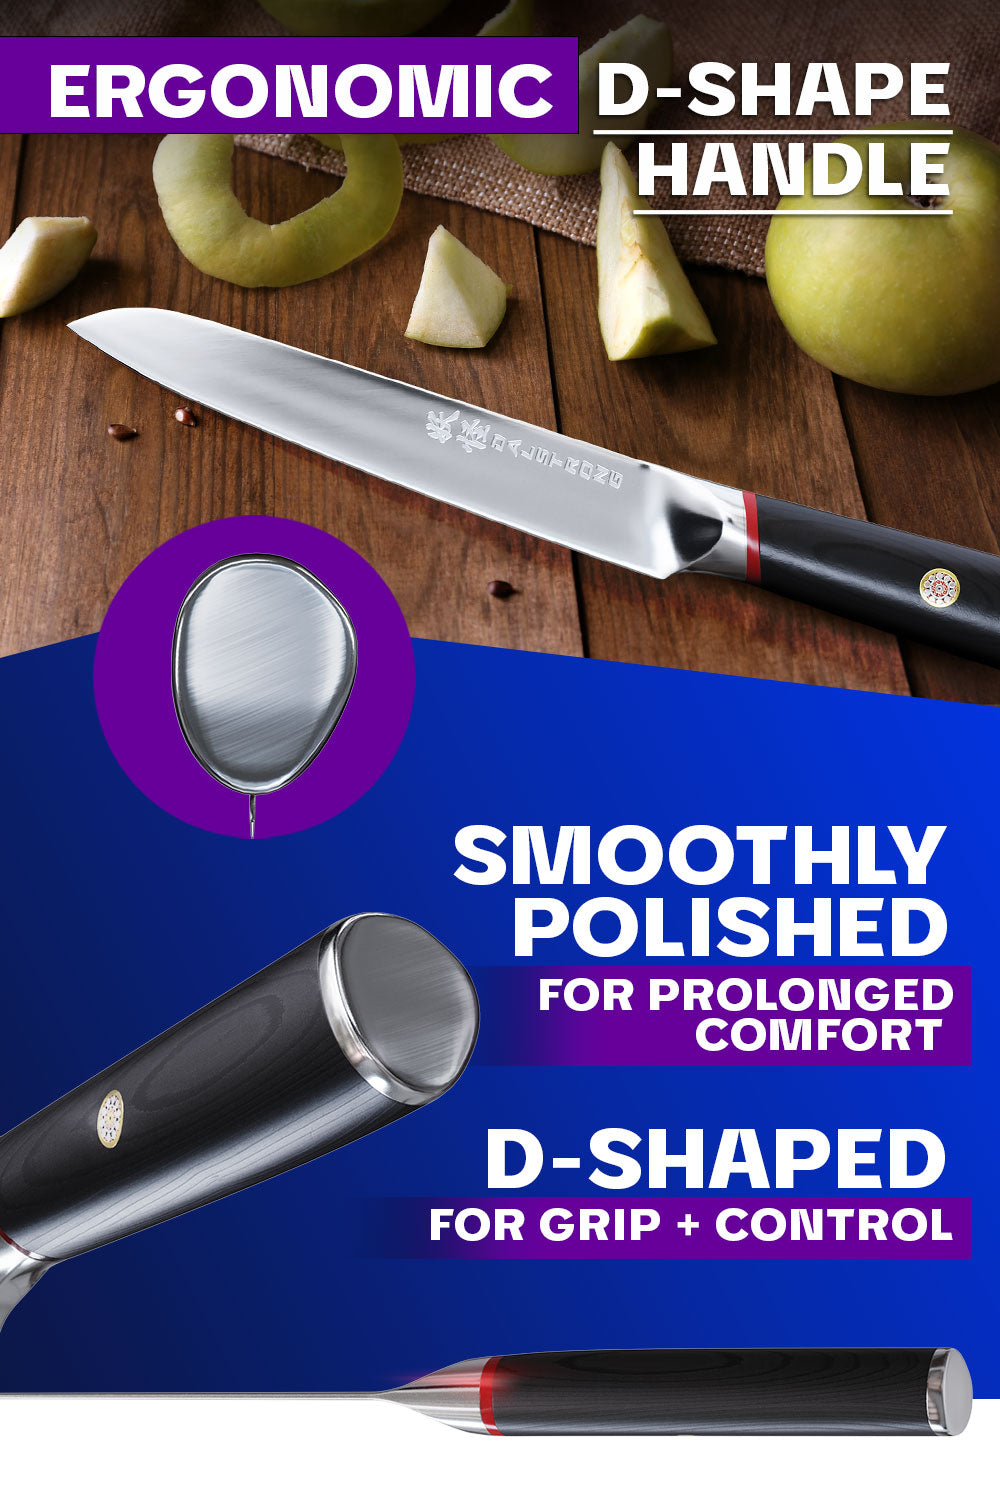 Dalstrong phantom series 5 inch utility knife showcasing it's d-shape pakka wood handle.